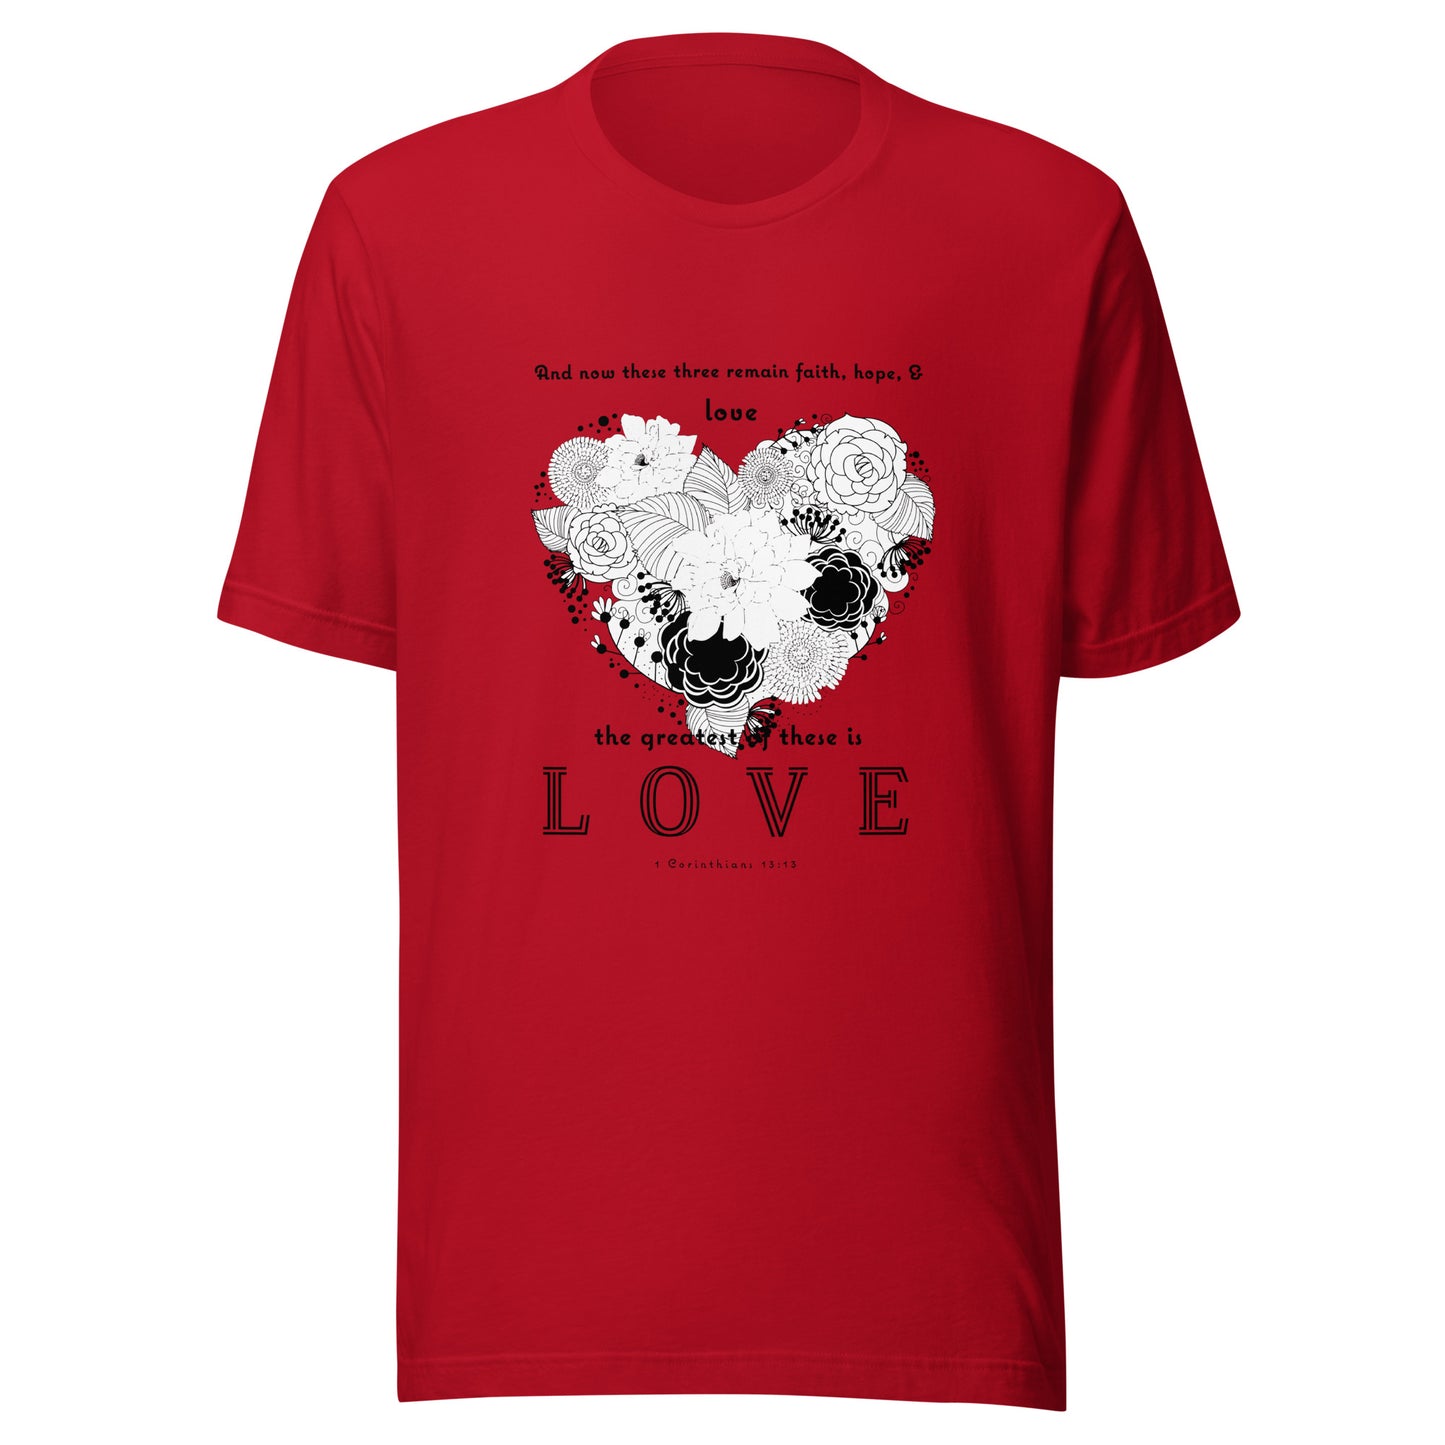 1 Corinthians 13:13 Greatest Love T-Shirt red